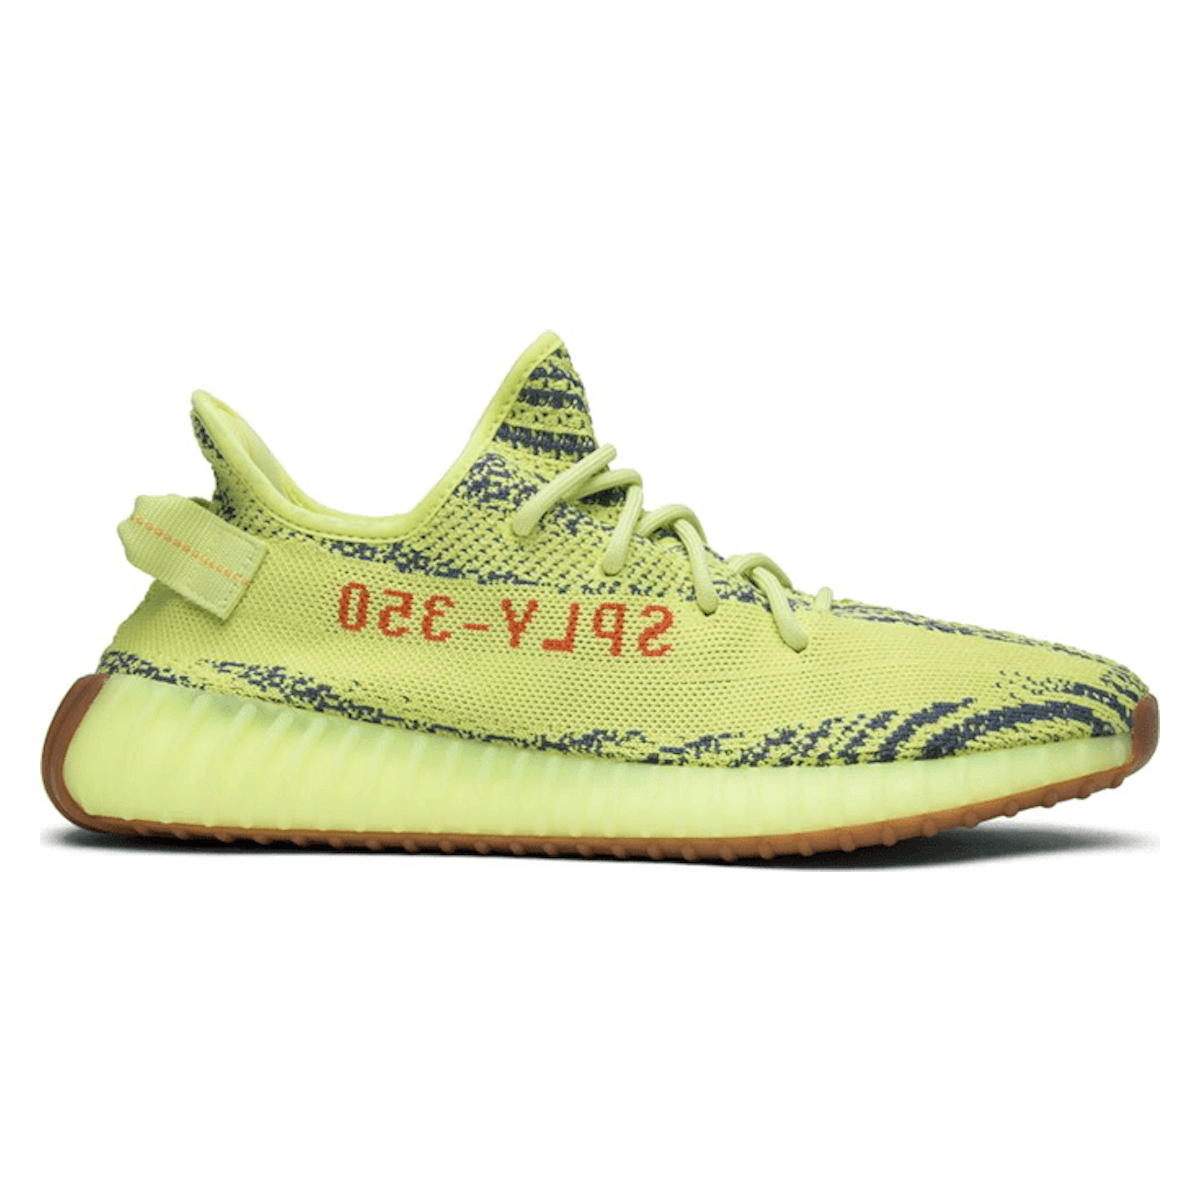 Adidas Yeezy Boost 350 V2 "Semi Frozen Yellow"